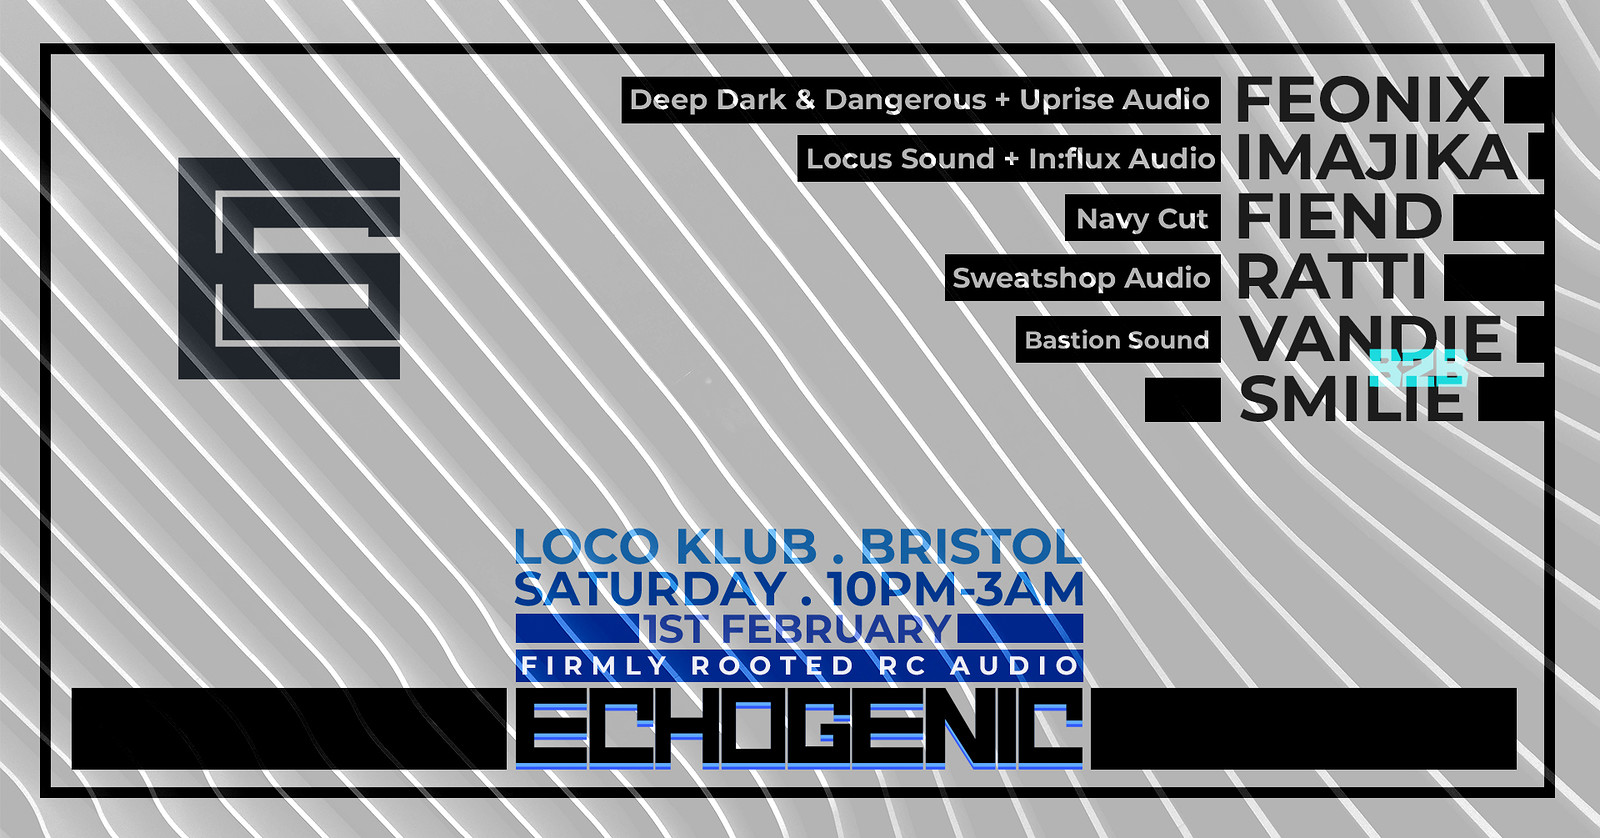 Echogenic Launch Party: Feonix, Imajika, Fiend at The Loco Klub